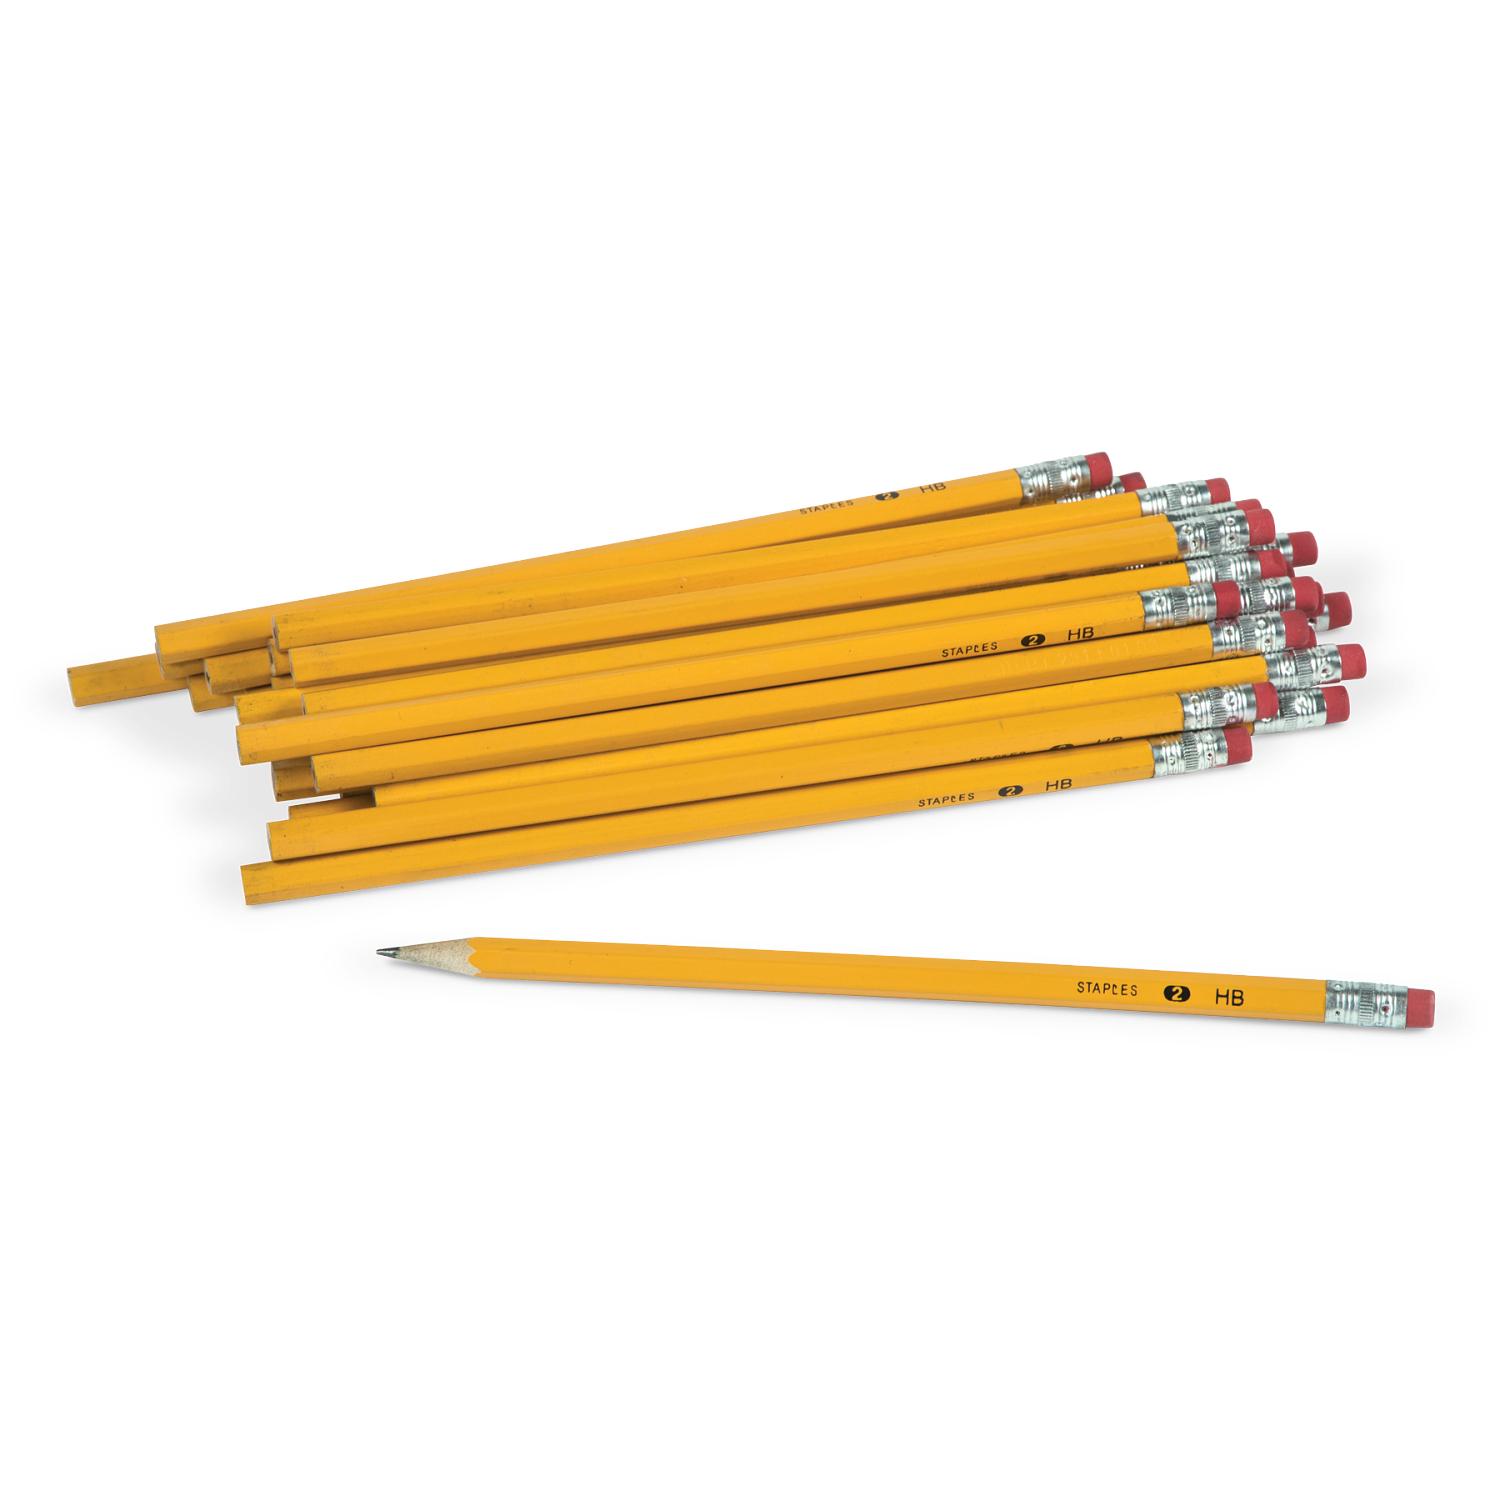 No. 2 Pencil Set - 12 Writing Pencils - White Eraser - Appointed Incense Cedar